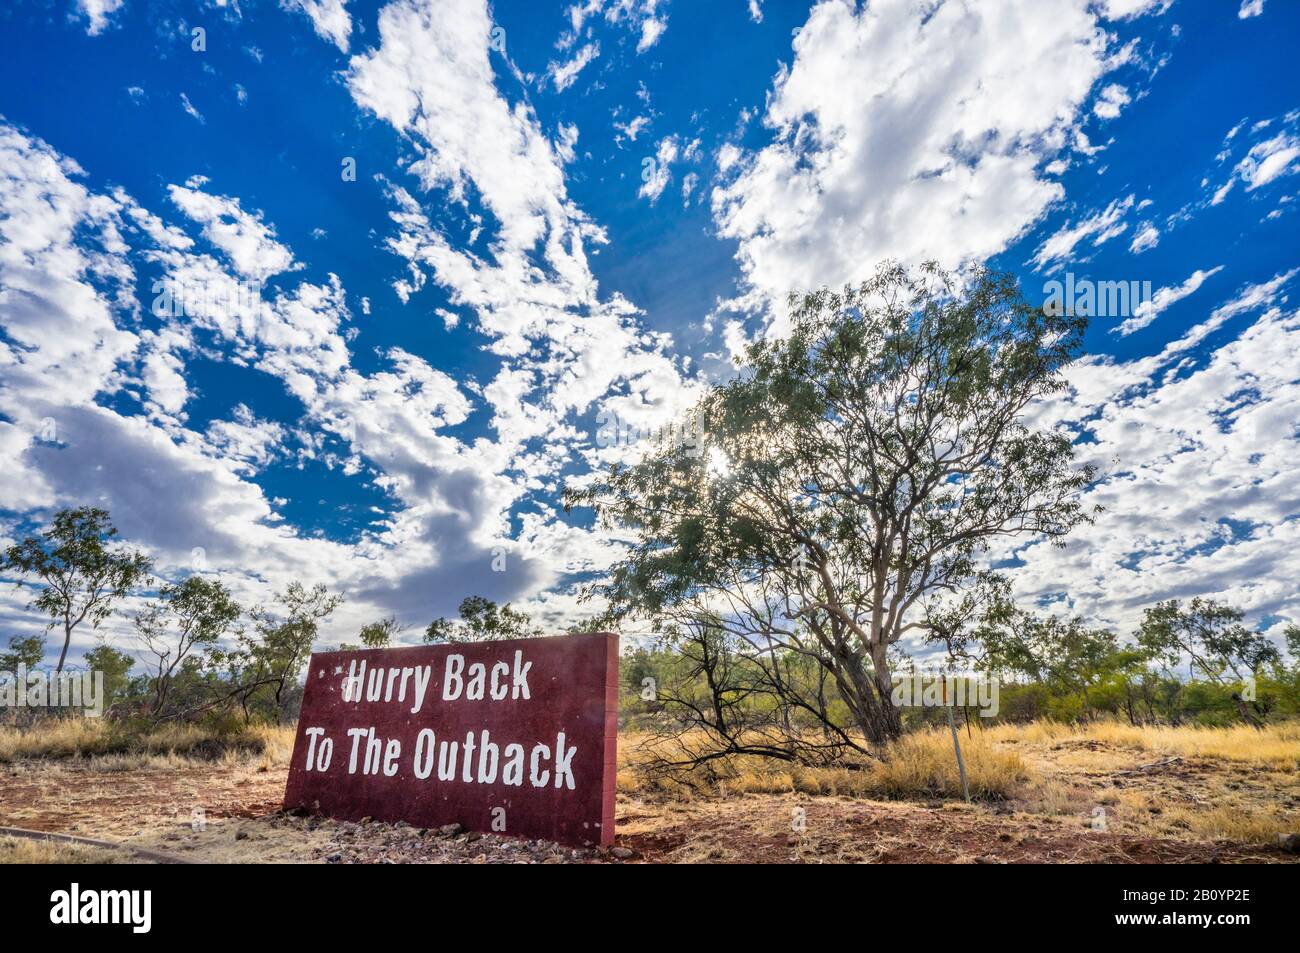 'Affrettatevi a tornare all'Outback', firmate i confini della città di Cloncurry a fianco della Flinders Hwy, Concurry, North-West Qoeensland, Australia Foto Stock